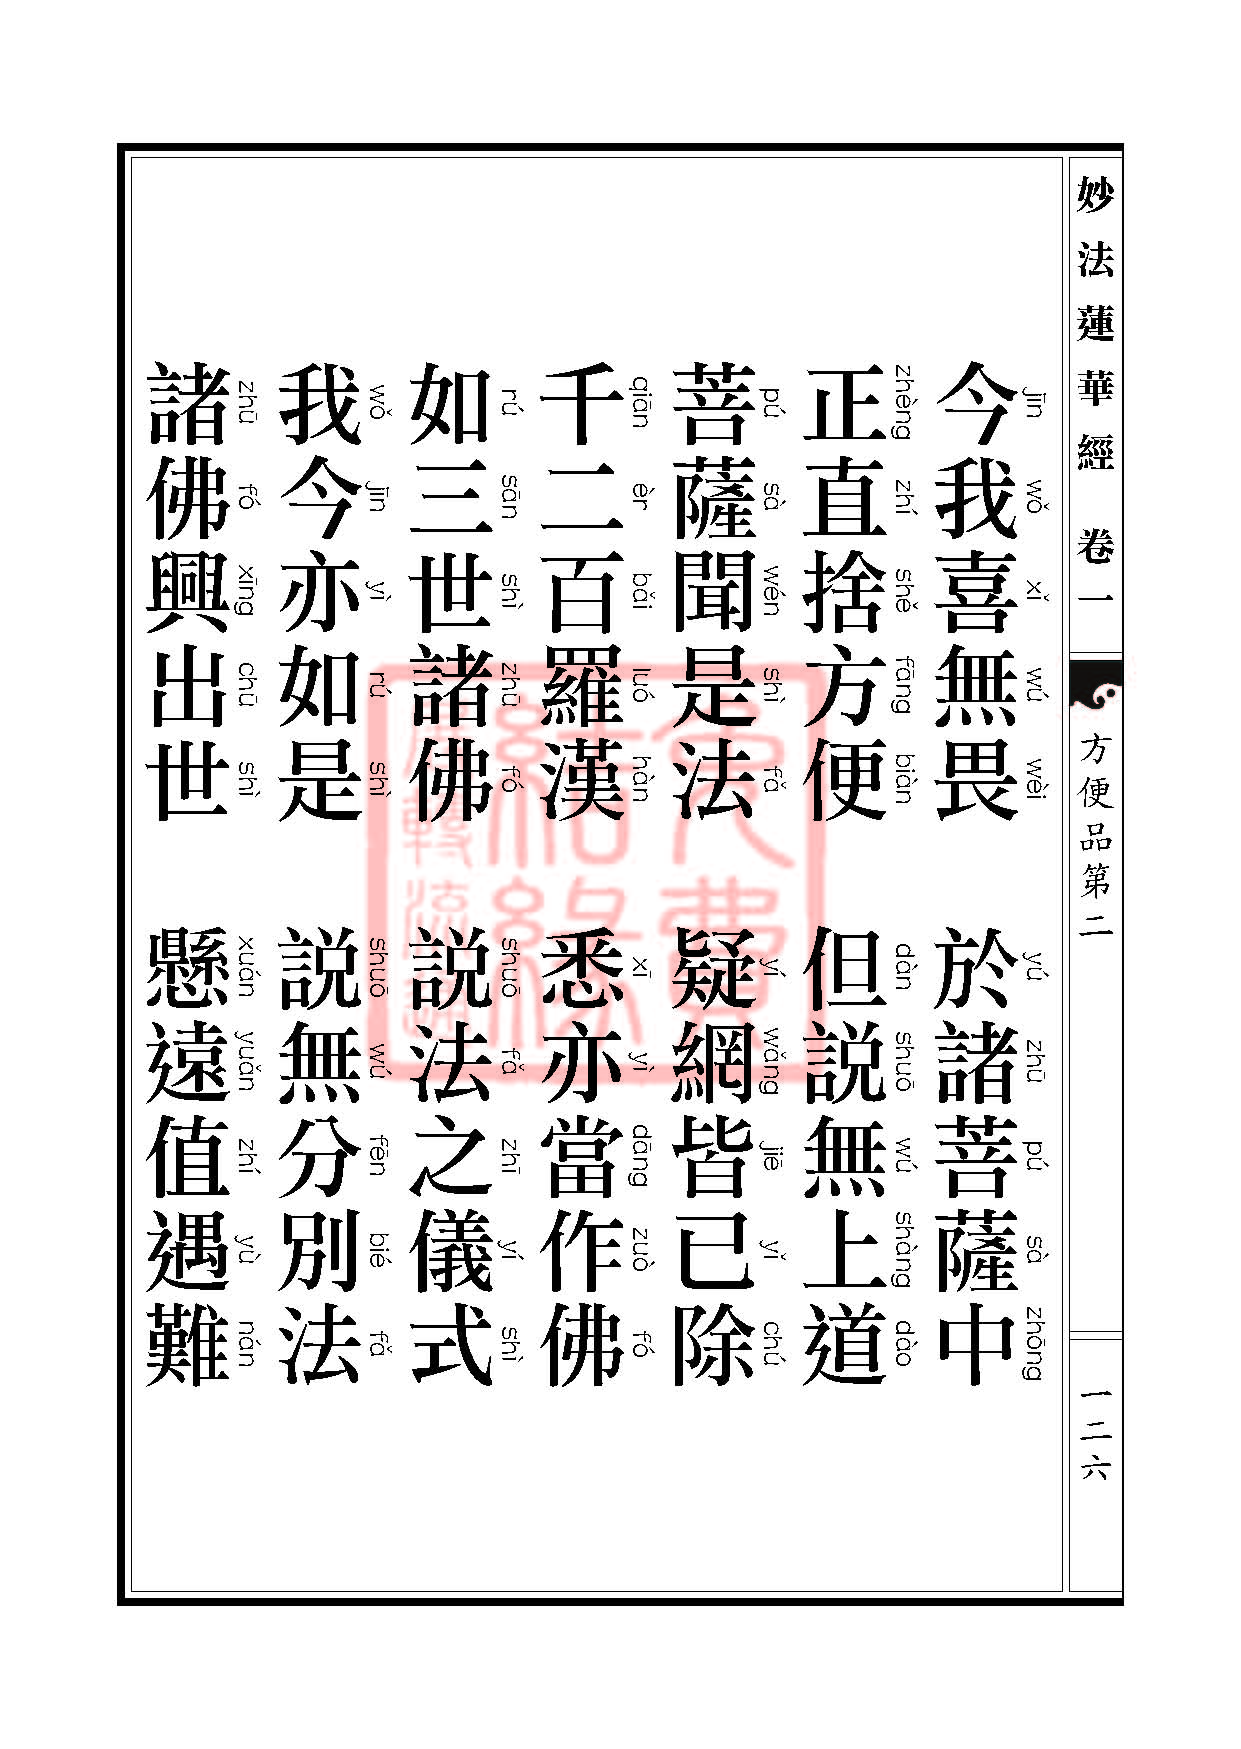 Book_FHJ_HK-A6-PY_Web_页面_126.jpg